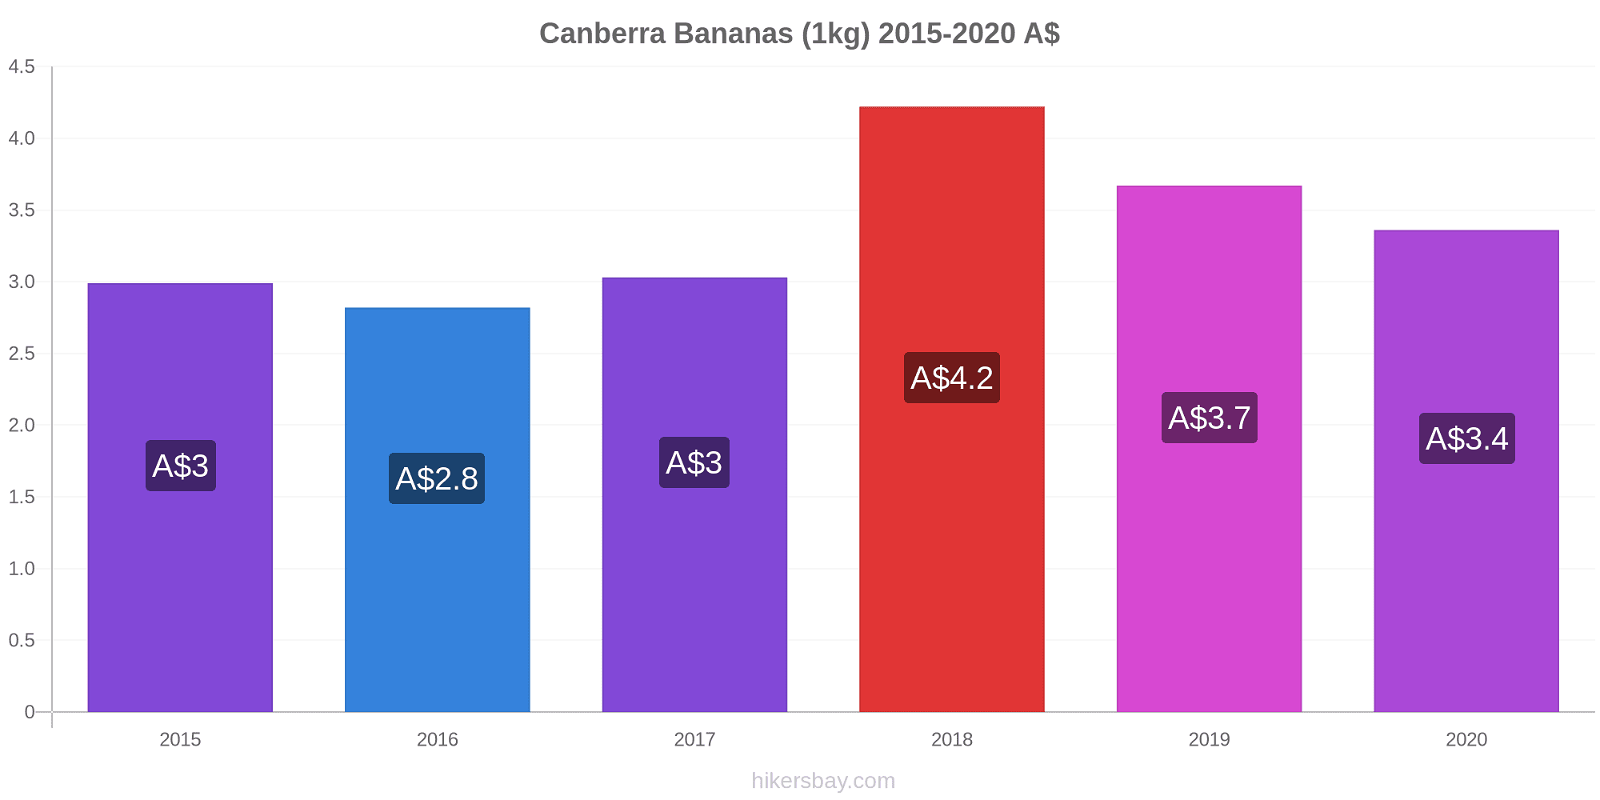 Canberra price changes Bananas (1kg) hikersbay.com